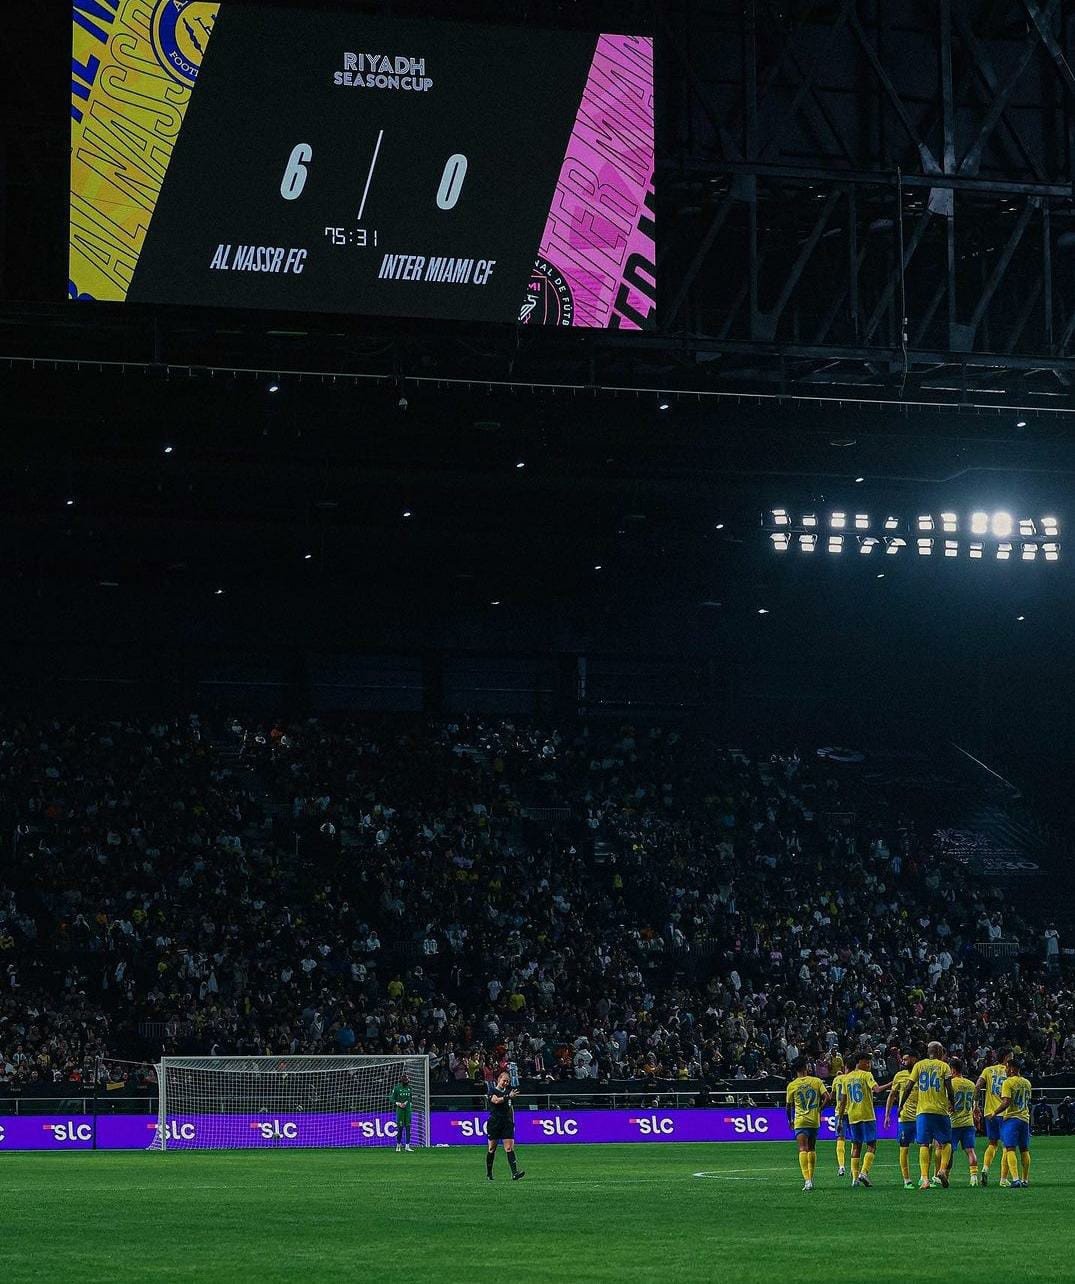 Al Nassr Bantai Inter Miami 6 - 0, Ronaldo Sumringah Messi Cemberut